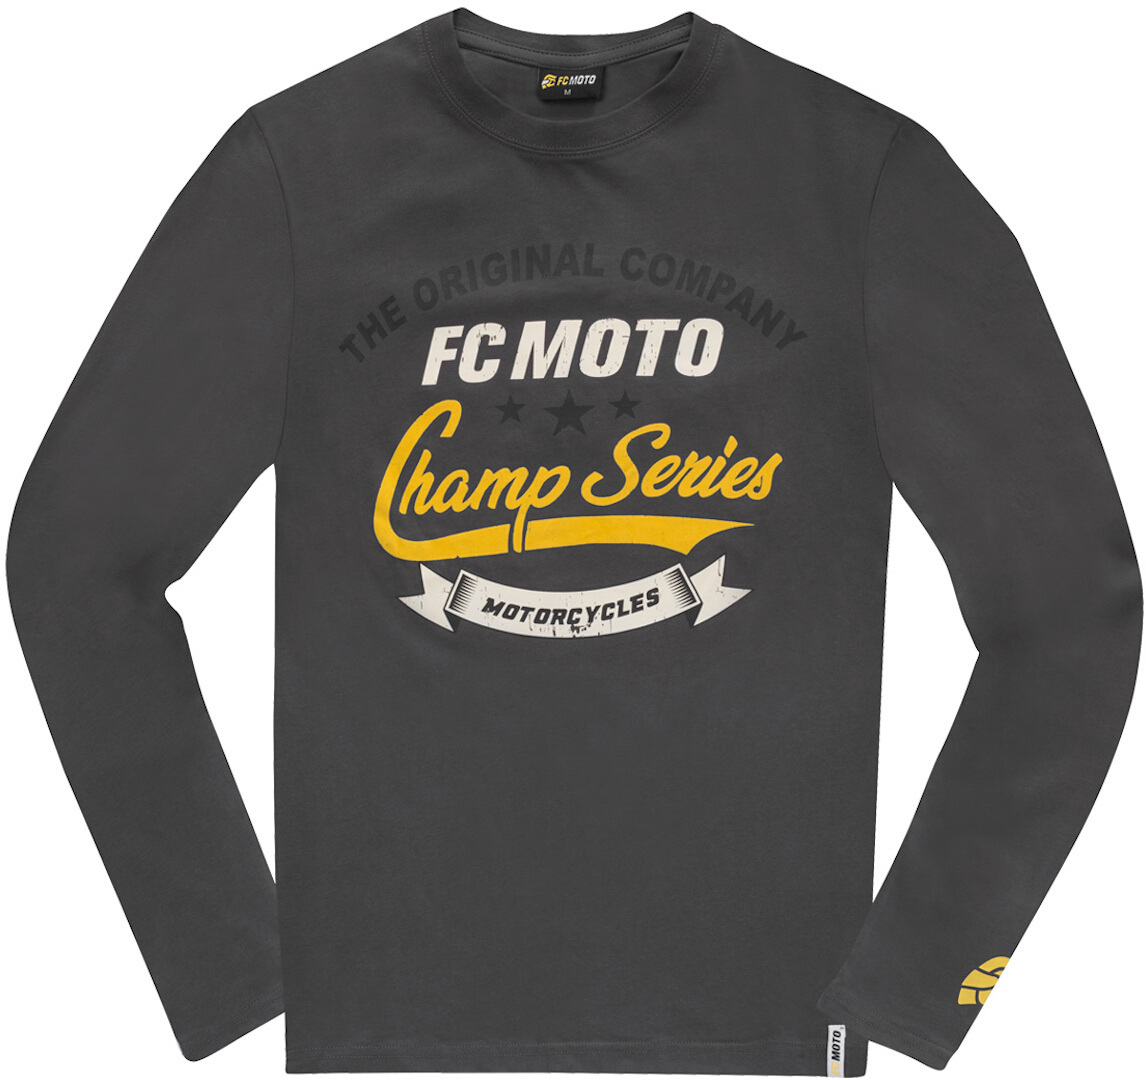 Рубашка FC-Moto Champ Series с длинными рукавами, темно-синий